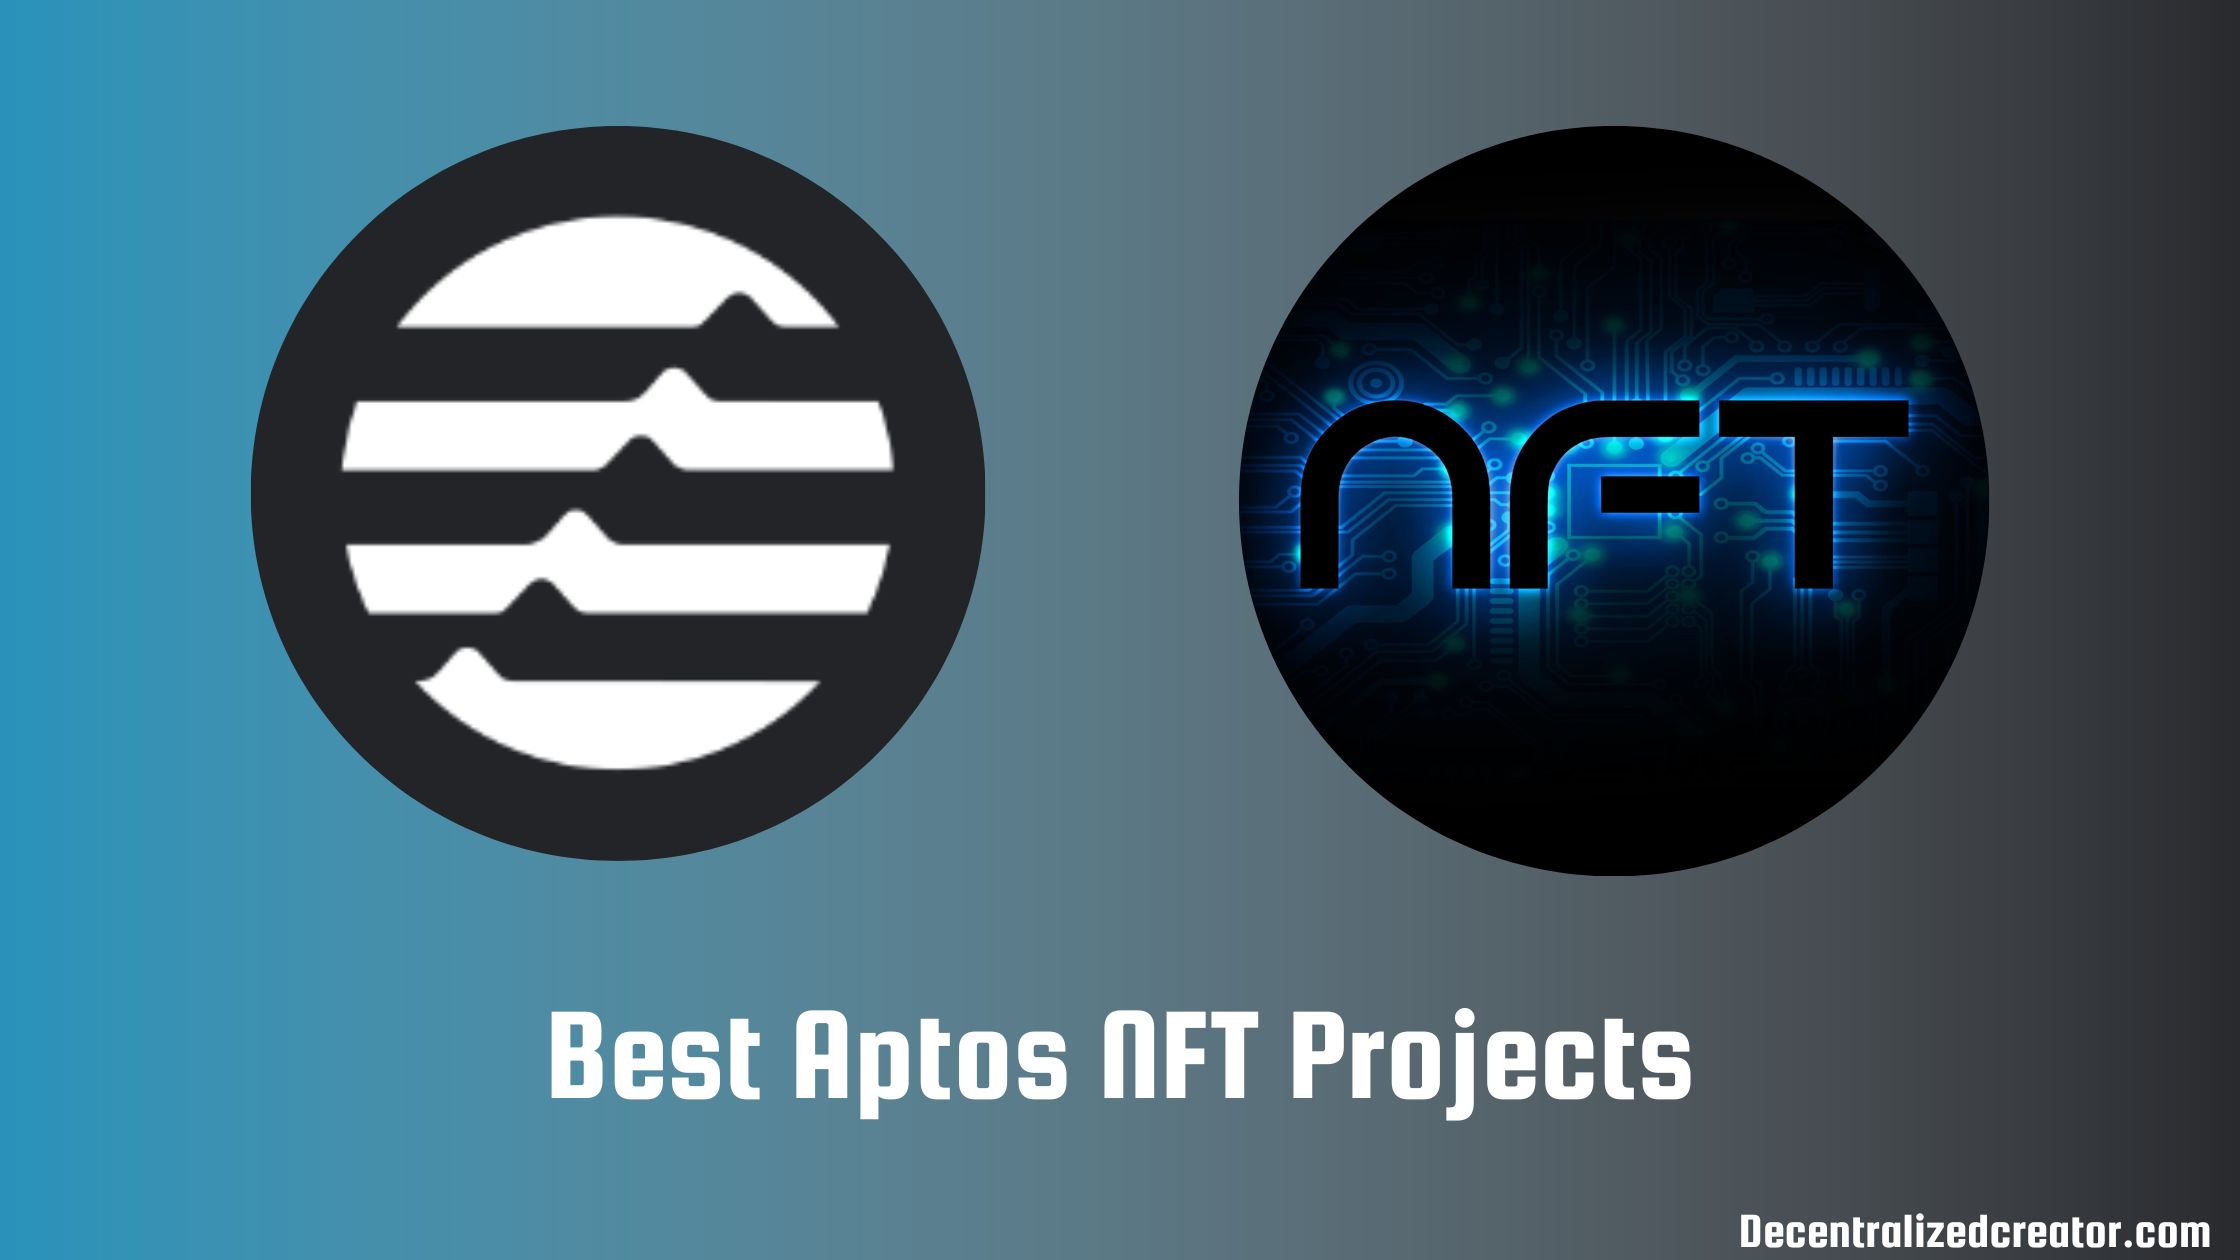 Best Aptos NFT Projects